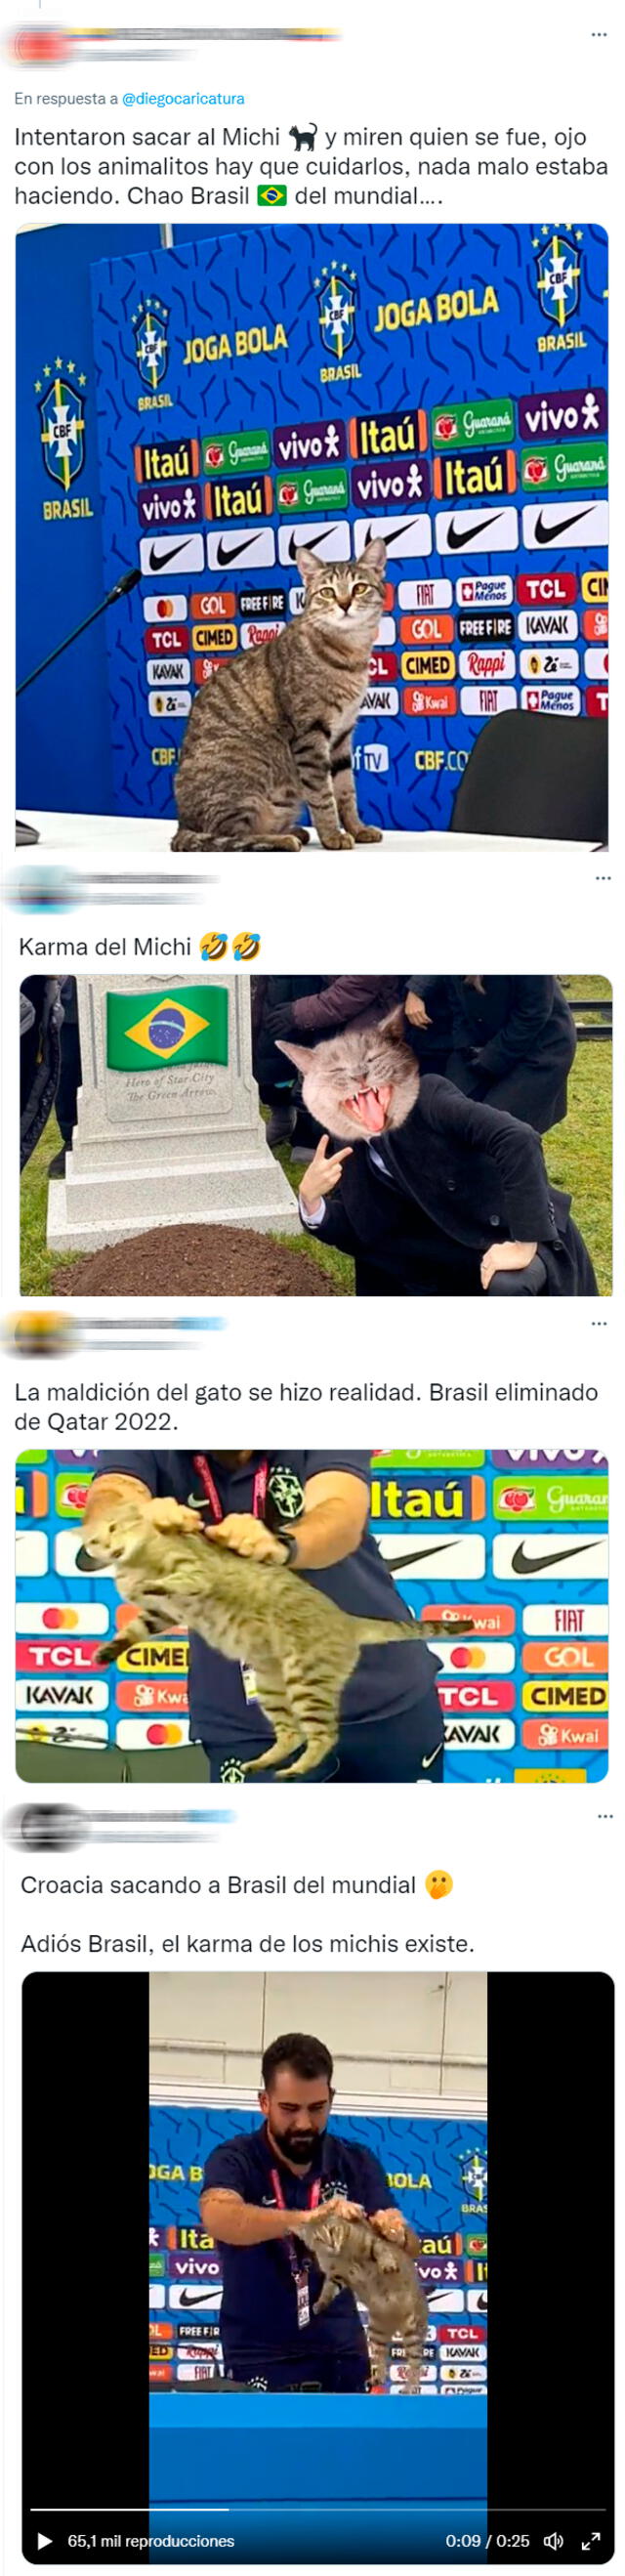 Eliminación de Brasil